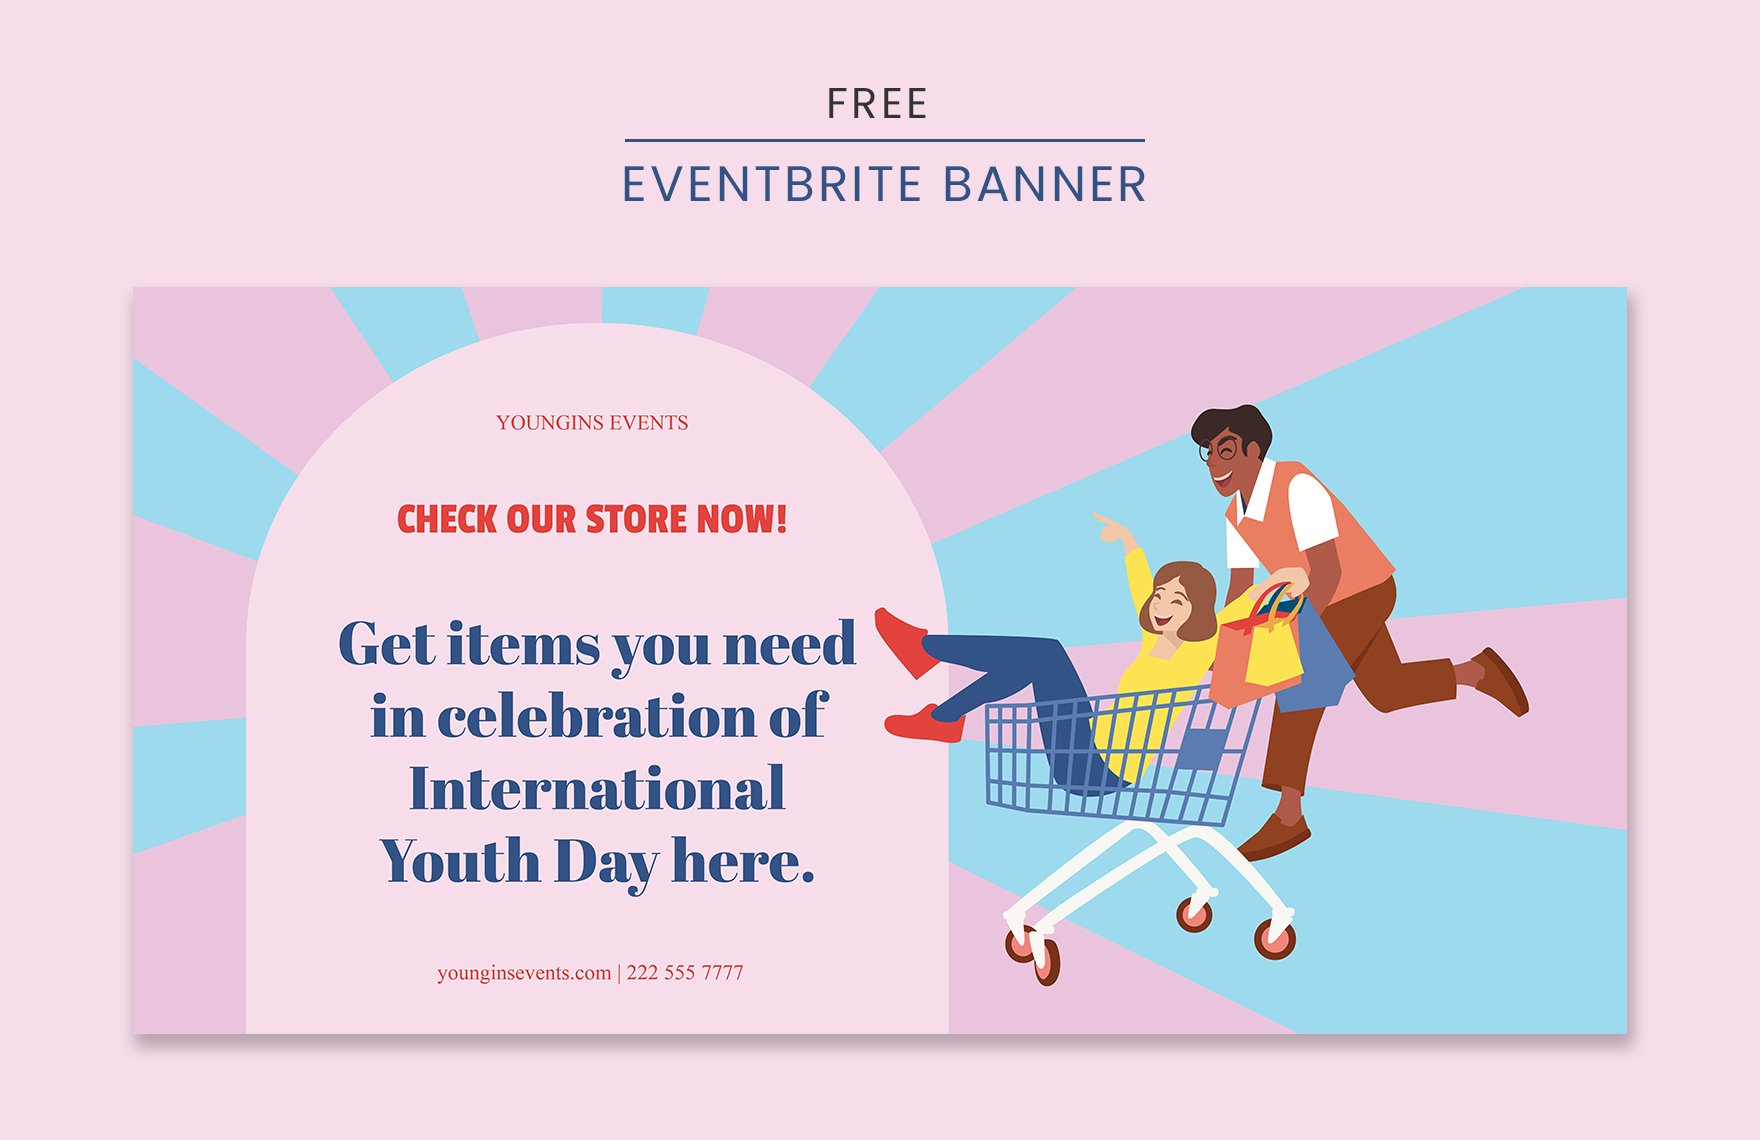 International Youth Day Eventbrite Banner in PDF, Illustrator, SVG, JPEG